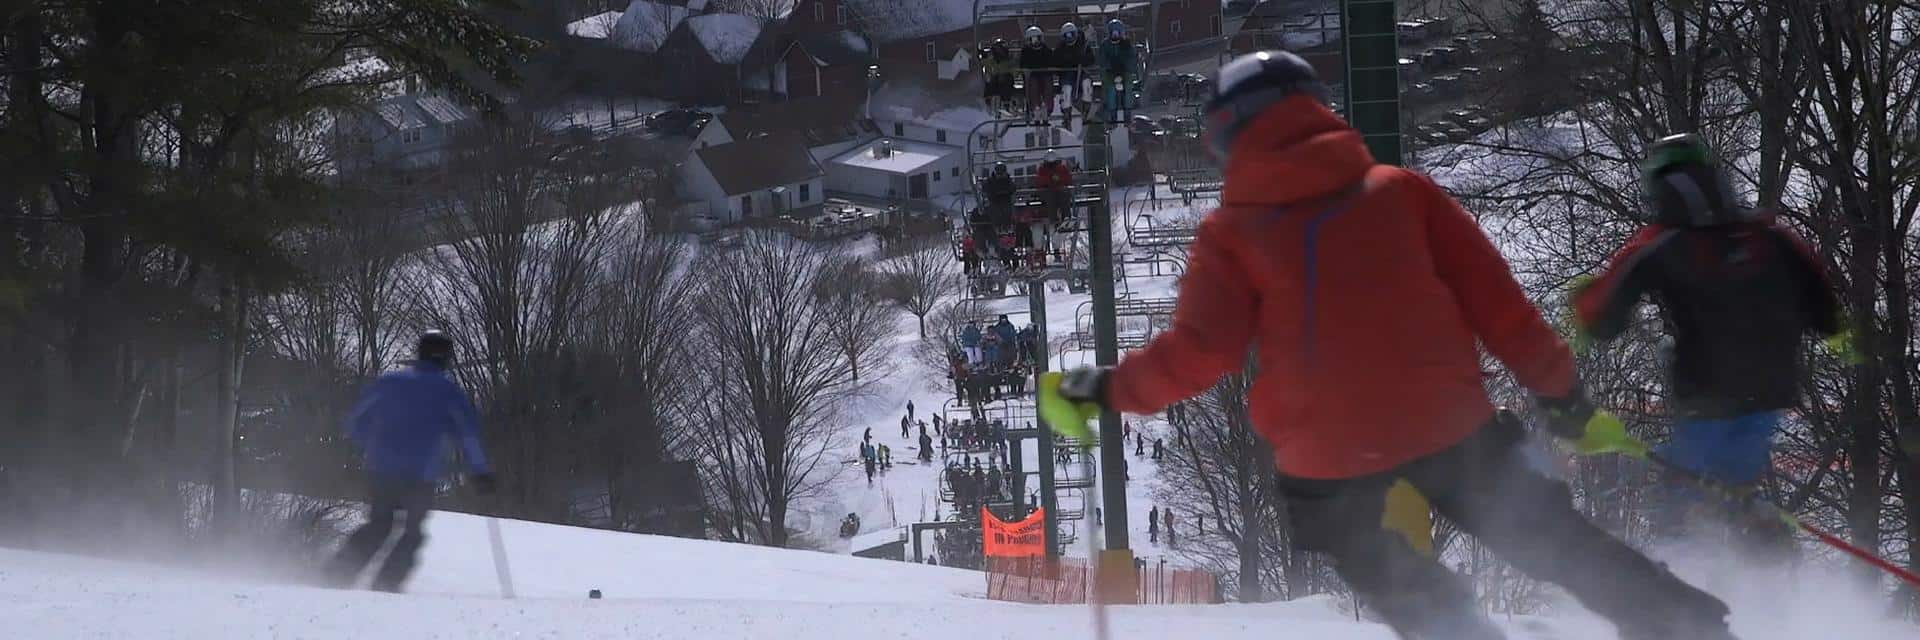 Ski Quechee - Downhill Skiing Chairlift